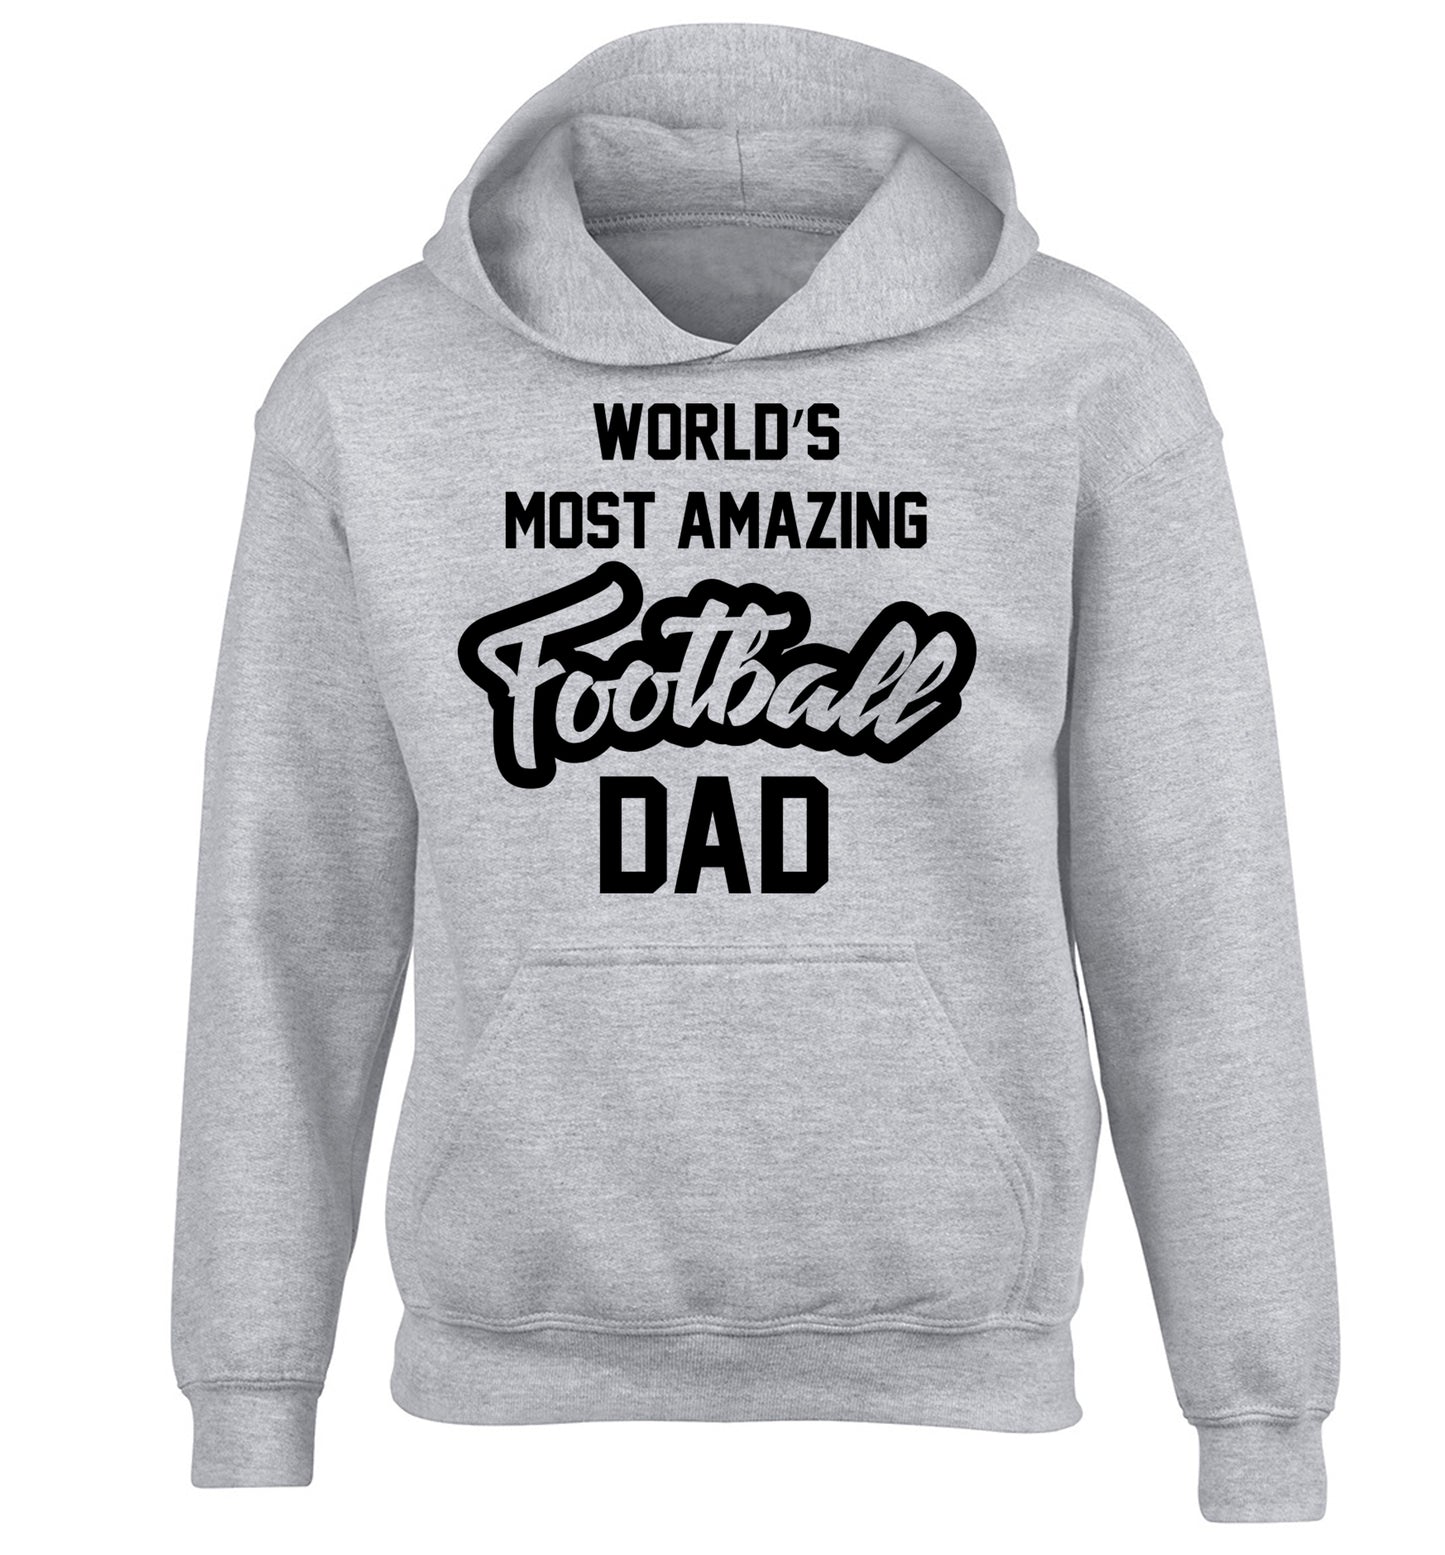 Worlds most amazing football dad children's grey hoodie 12-14 Years